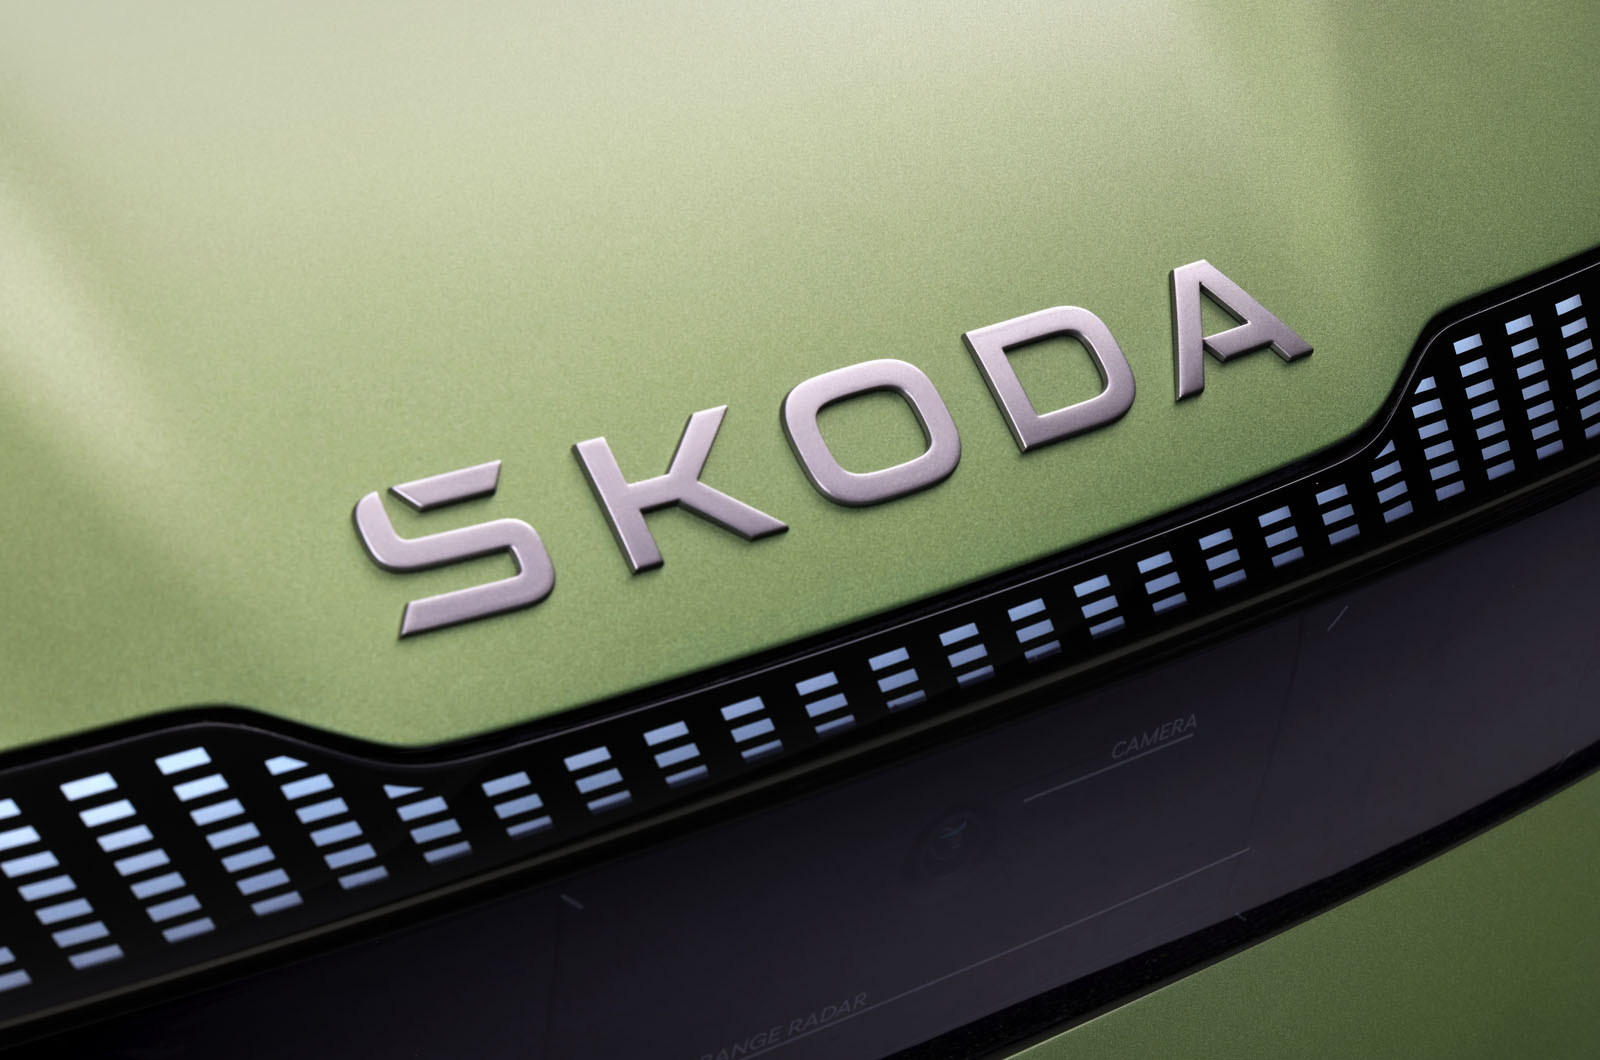 https://www.autocar.co.uk/sites/autocar.co.uk/files/images/car-reviews/first-drives/legacy/new-skoda-logo.jpg